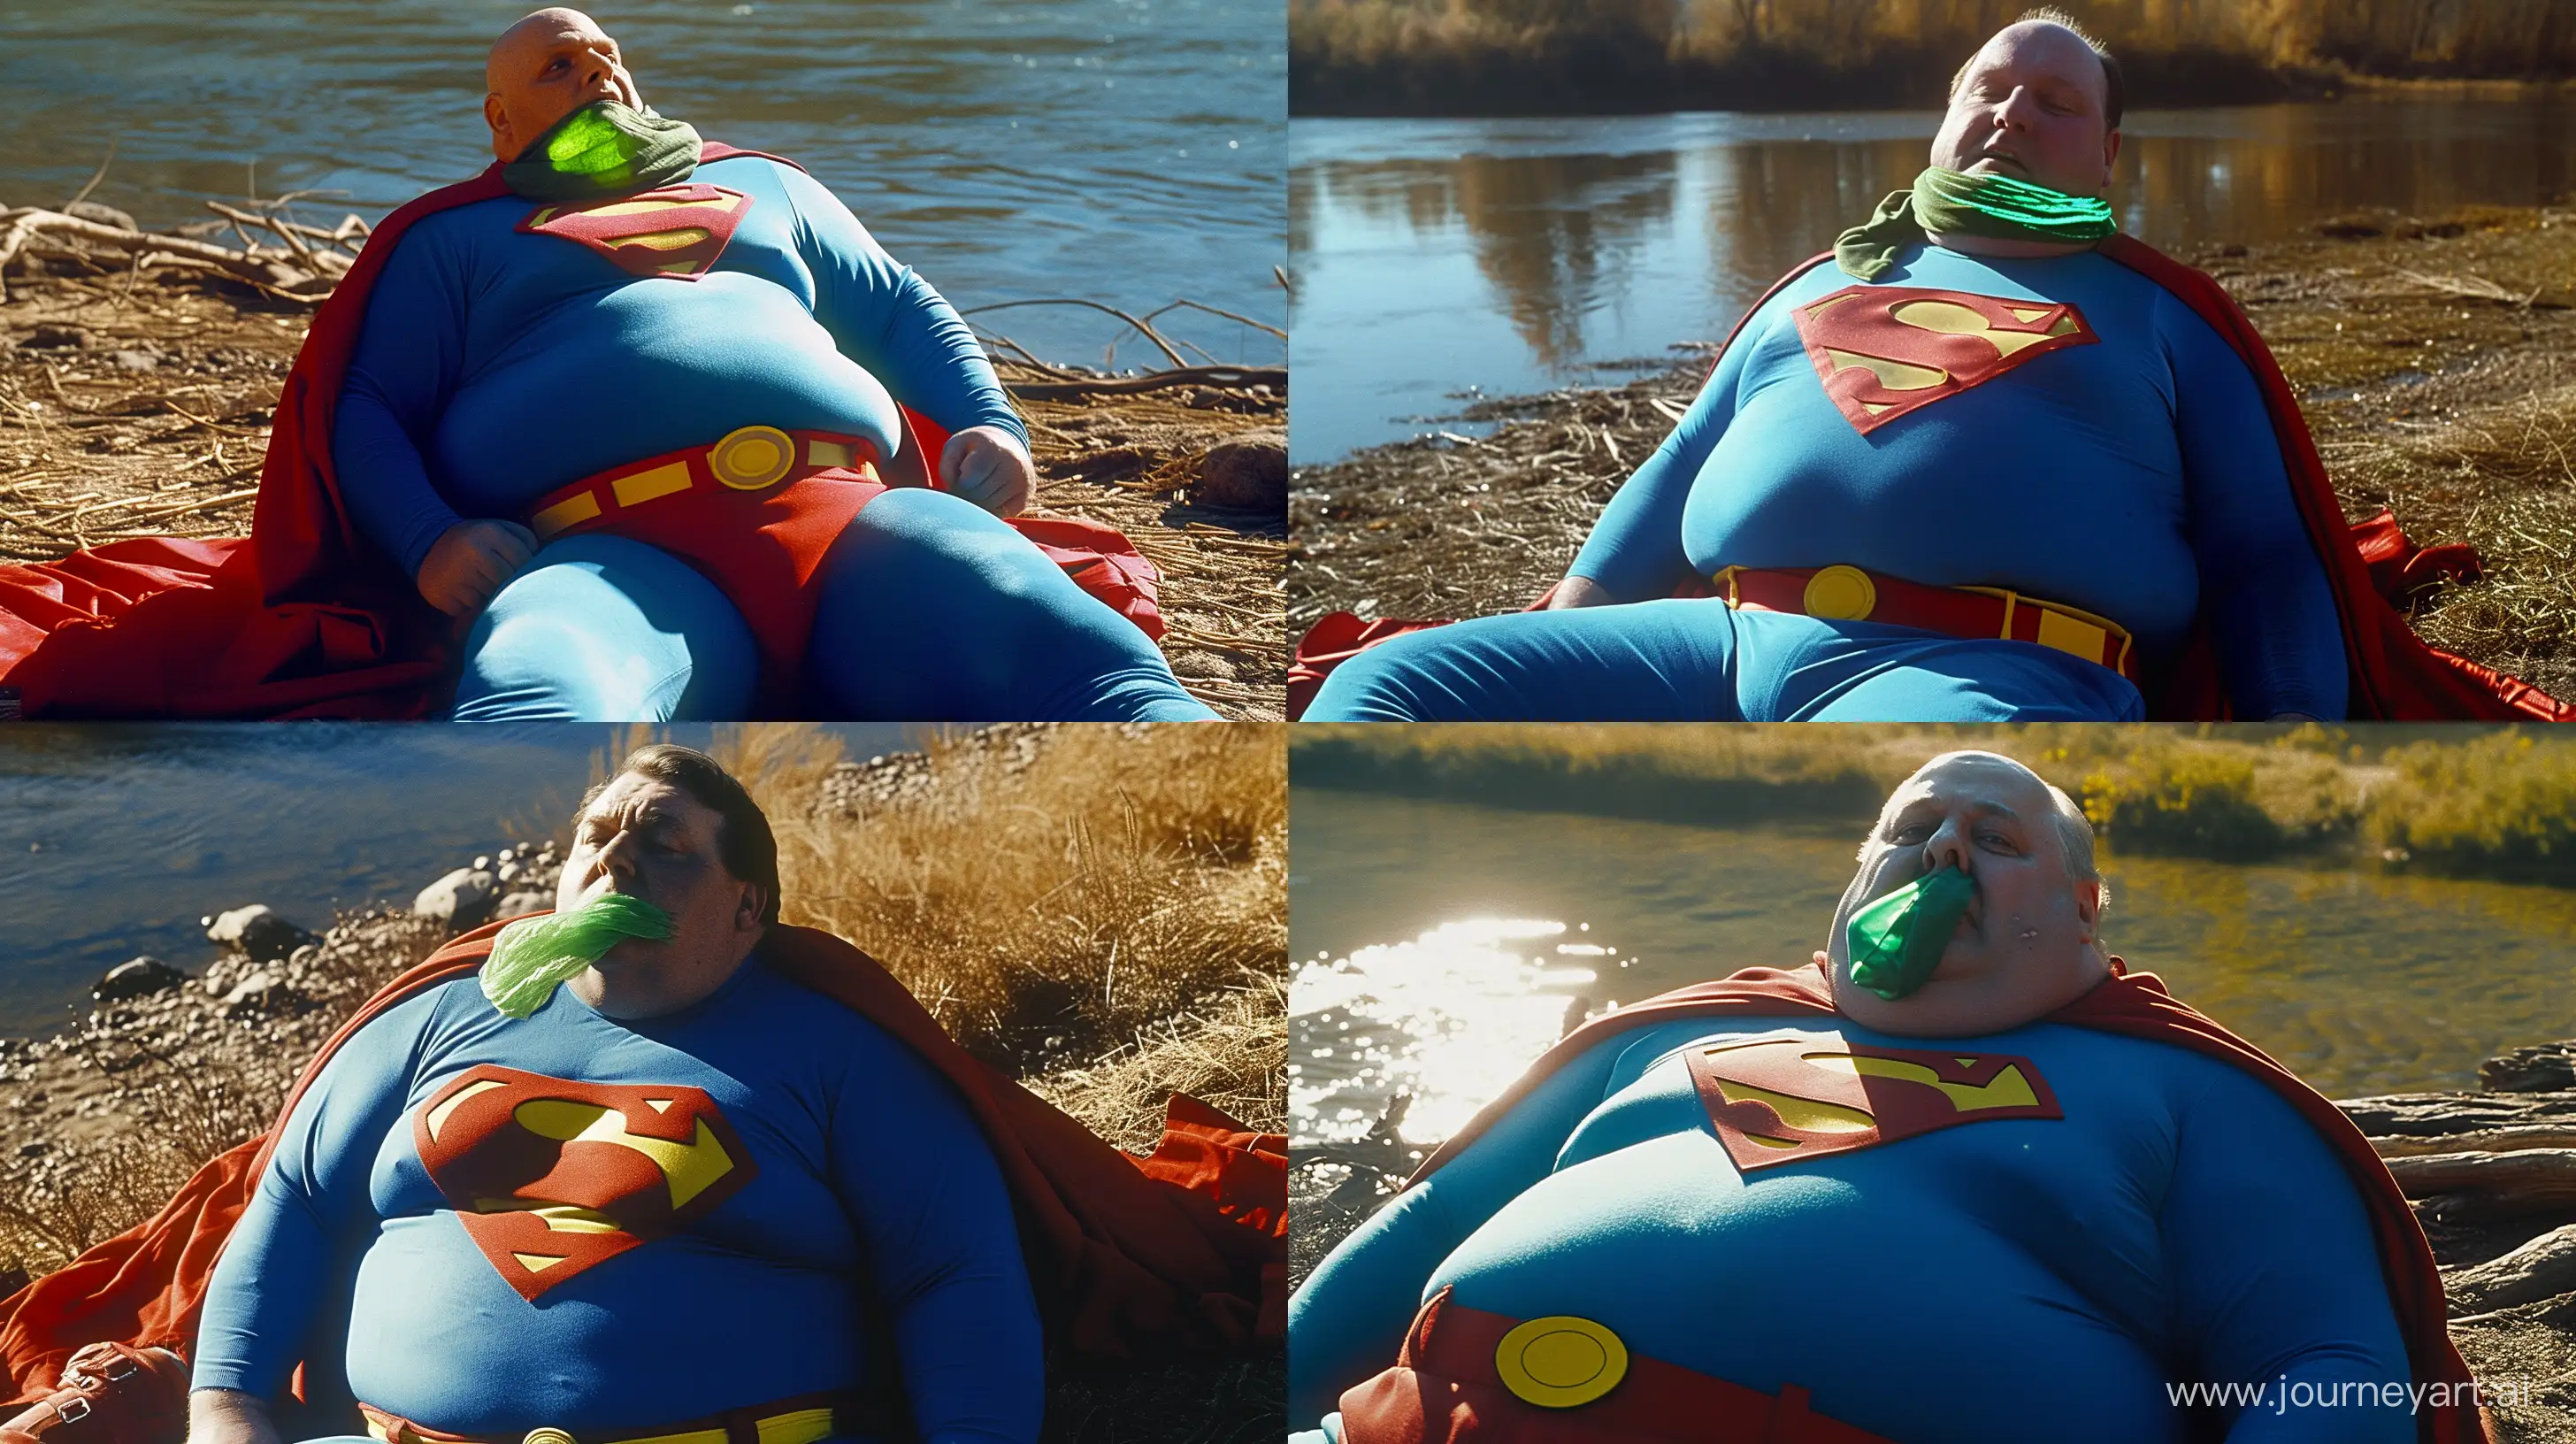 Elderly-Superman-Basks-in-Sunlight-by-the-River